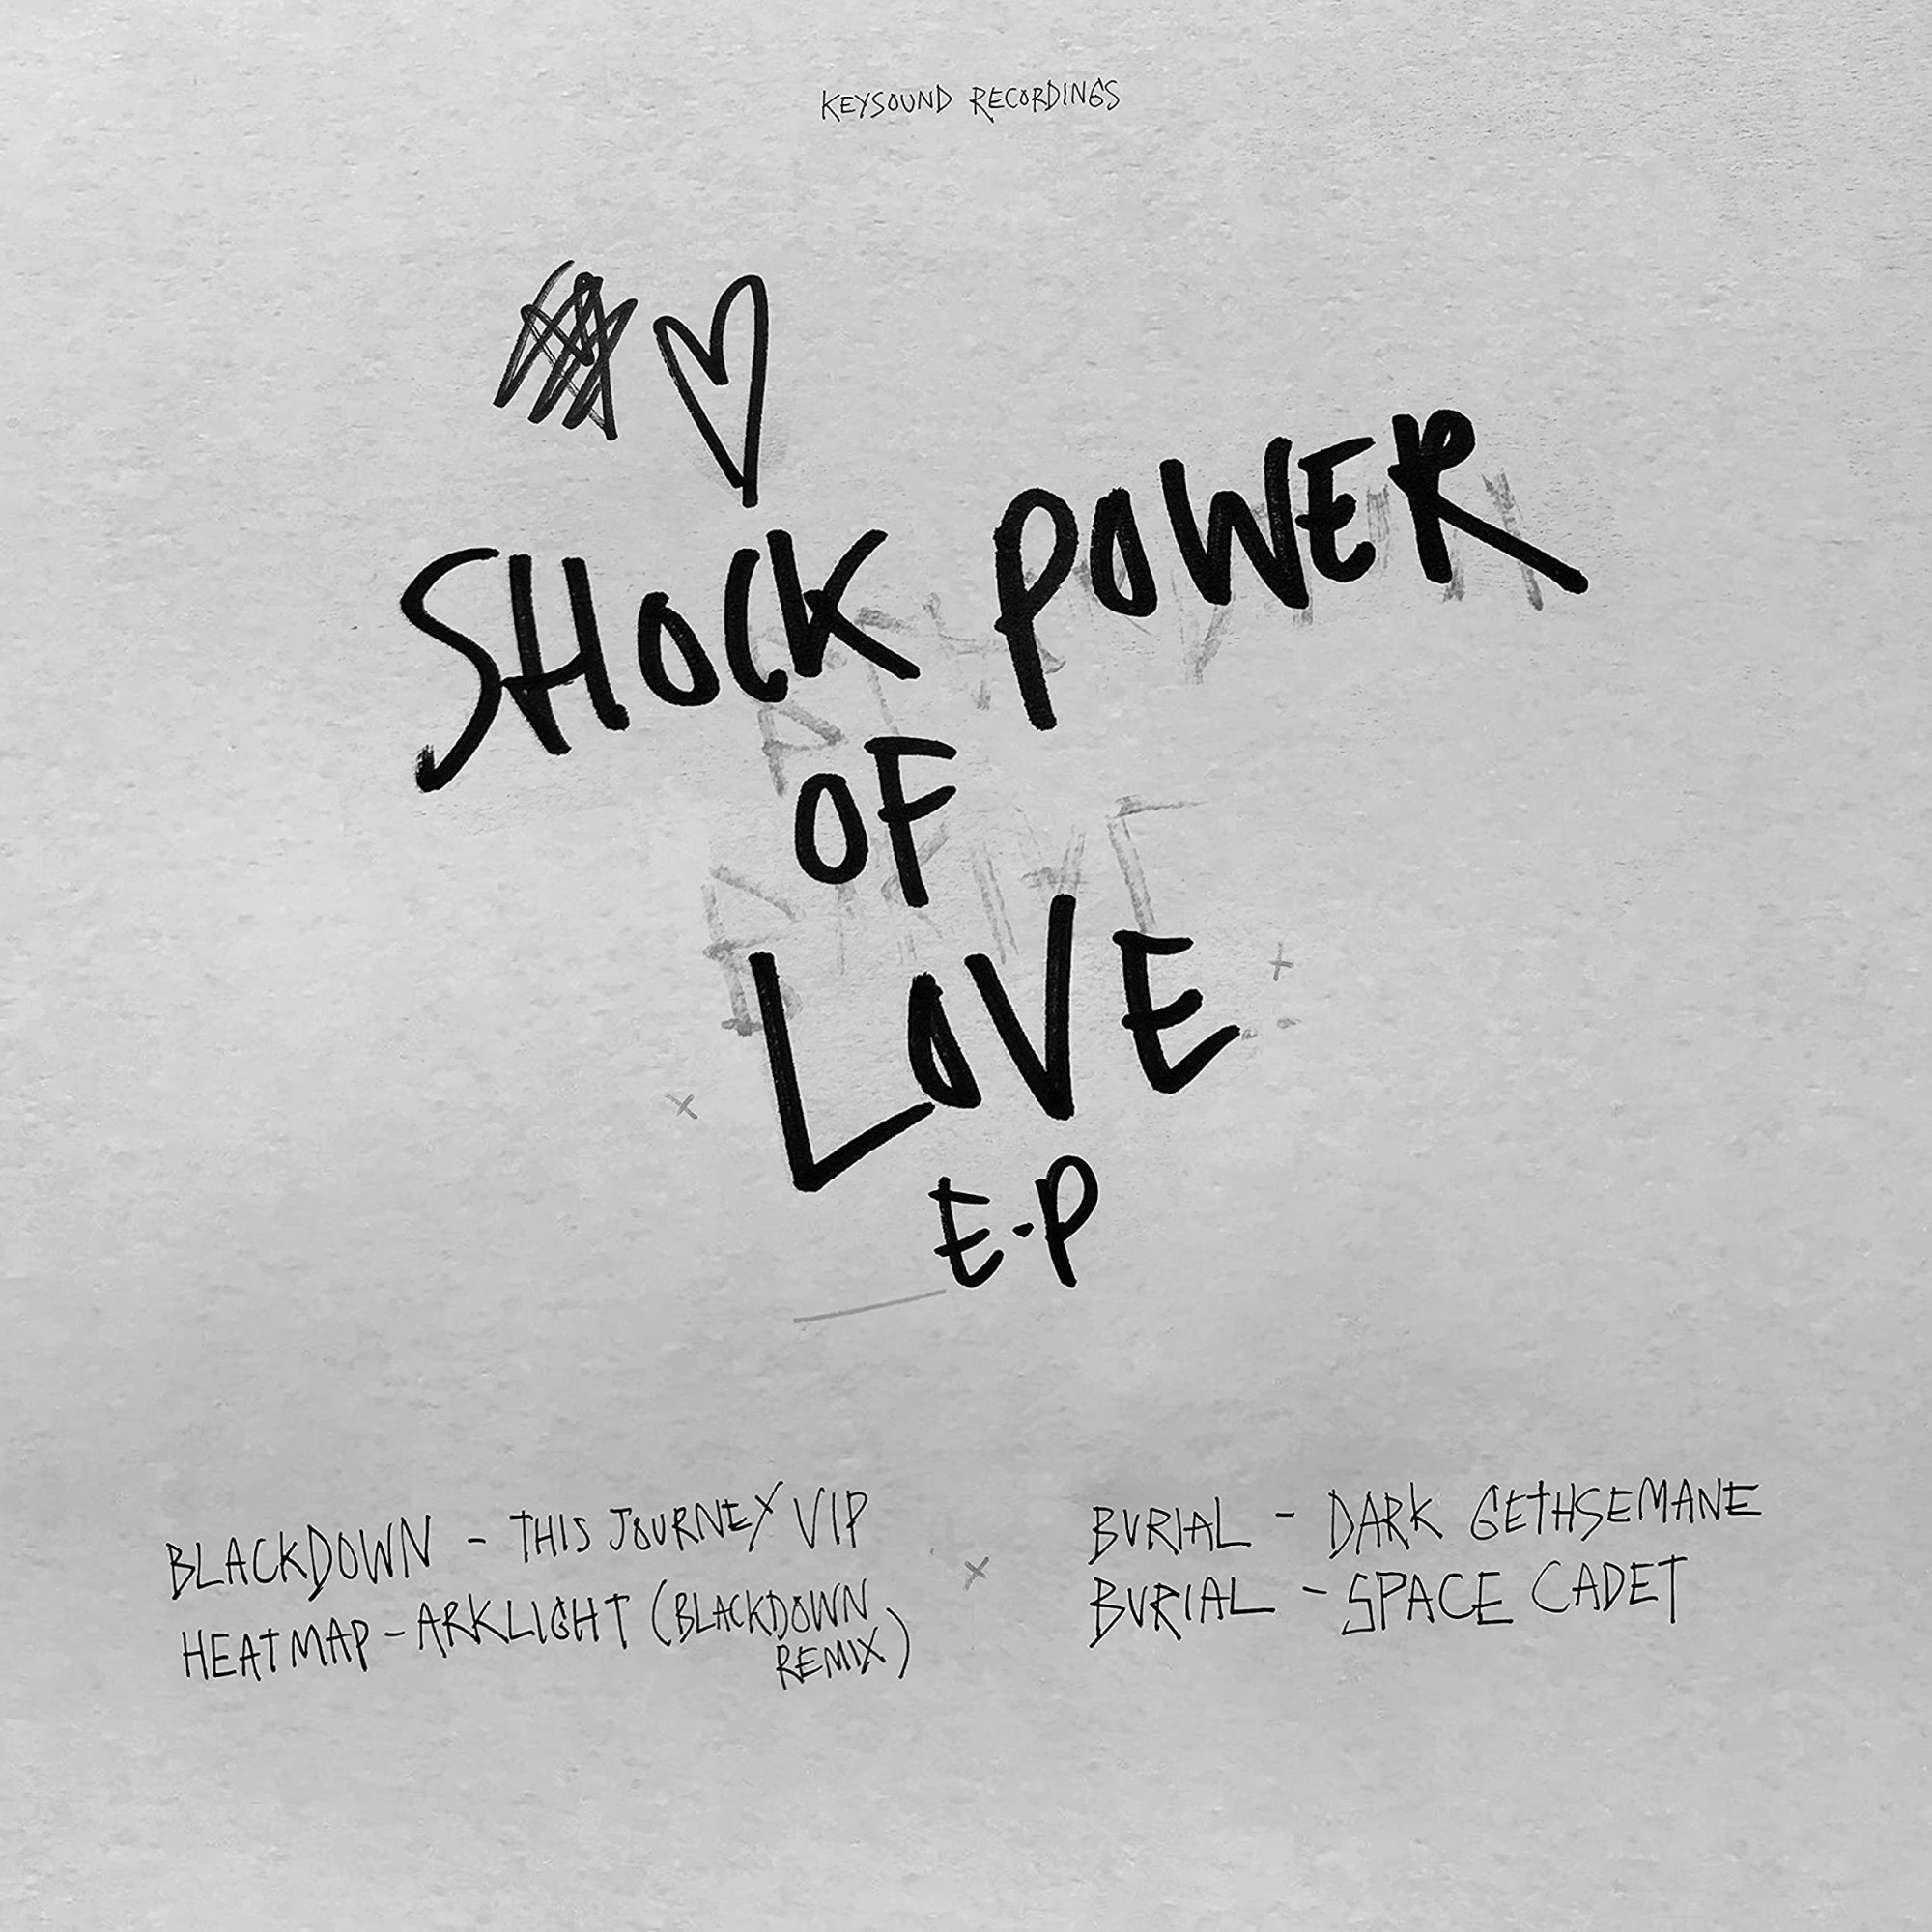 SHOCK POWER OF LOVE E.P.